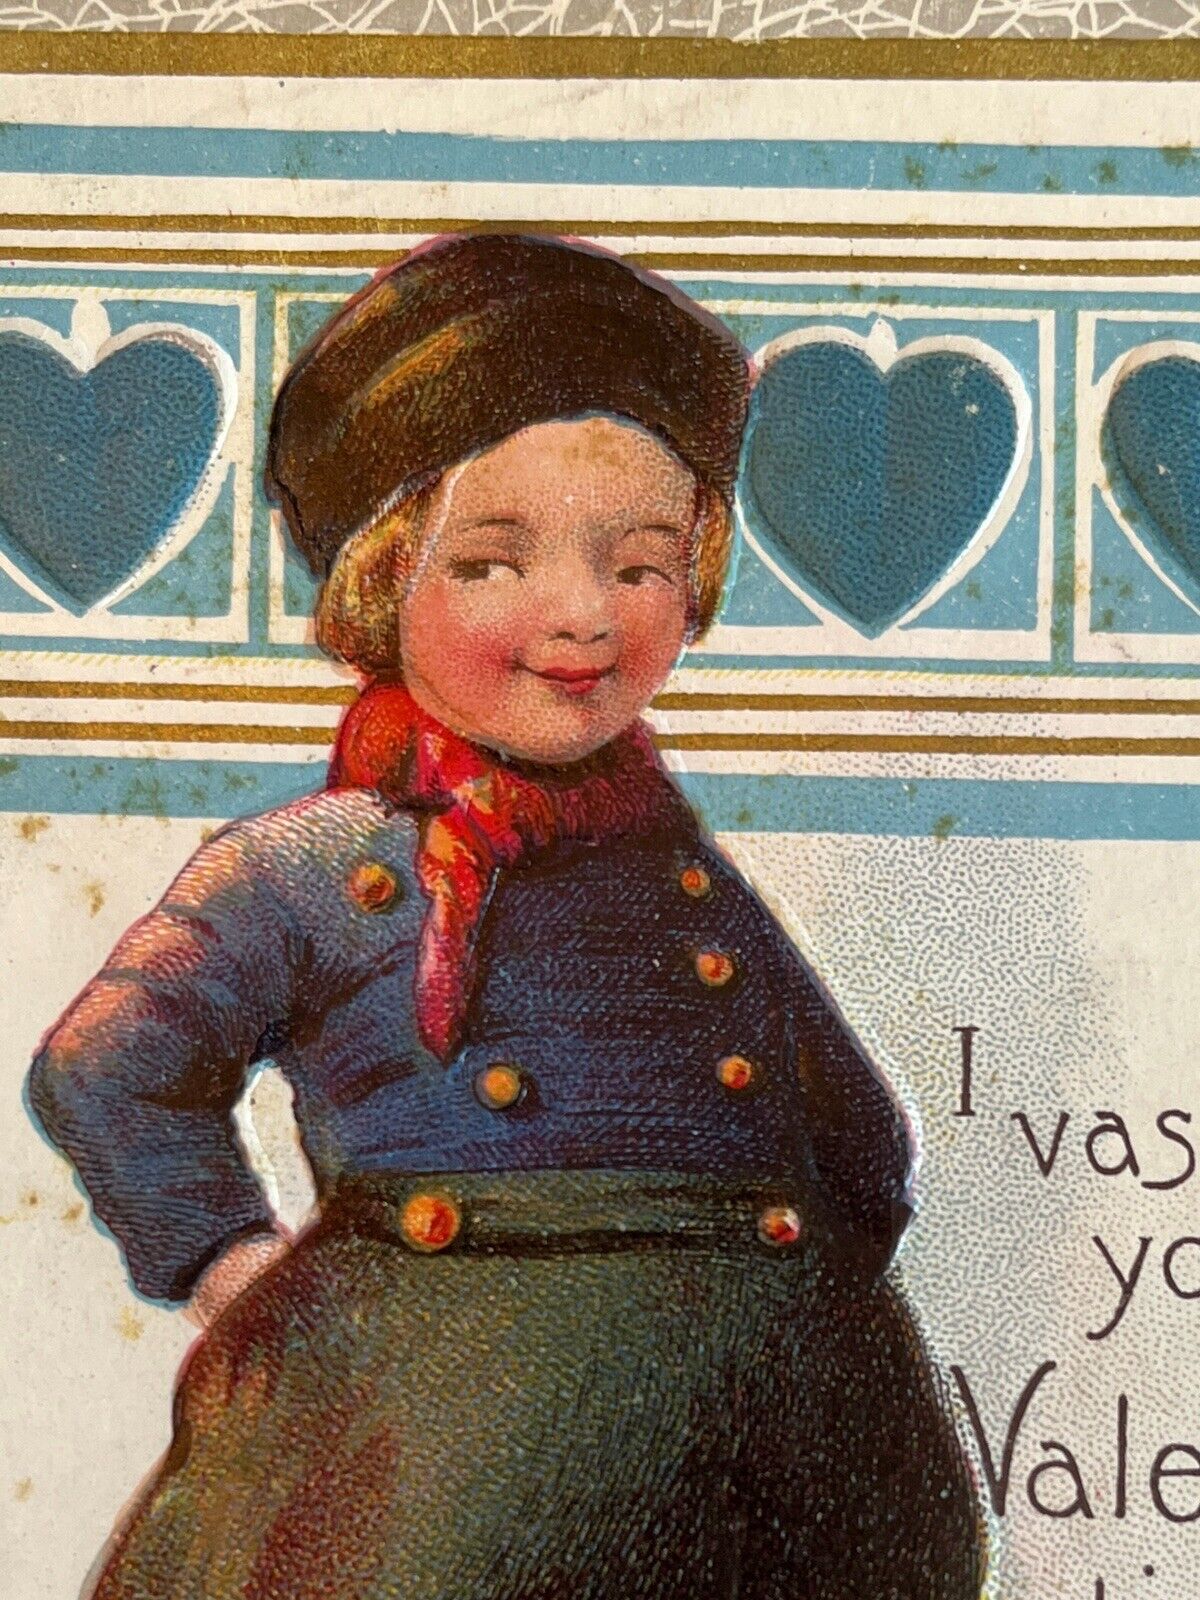 Antique Early 1900s Ephemera Valentine Postcard Humorous Dutch Boy Wooden Shoes